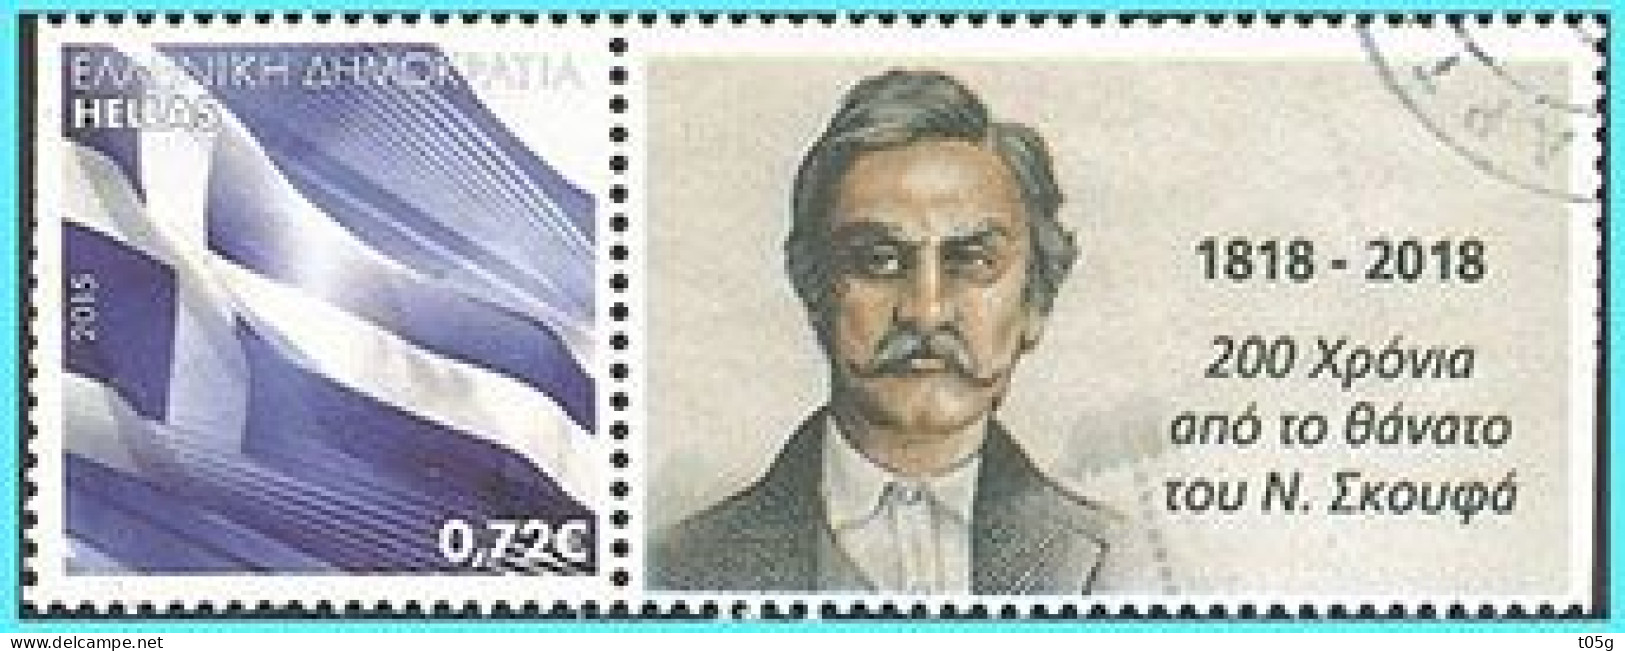 GREECE- GRECE- HELLAS- EPIRUS  2020: Personalised Stamps For τον  Ν. ΣΚΟΥΦΑ  ιδρυτή της ΦΙΛΙΚΗΣ ΕΤΑΙΡΕΙΑΣ  Used - Usati